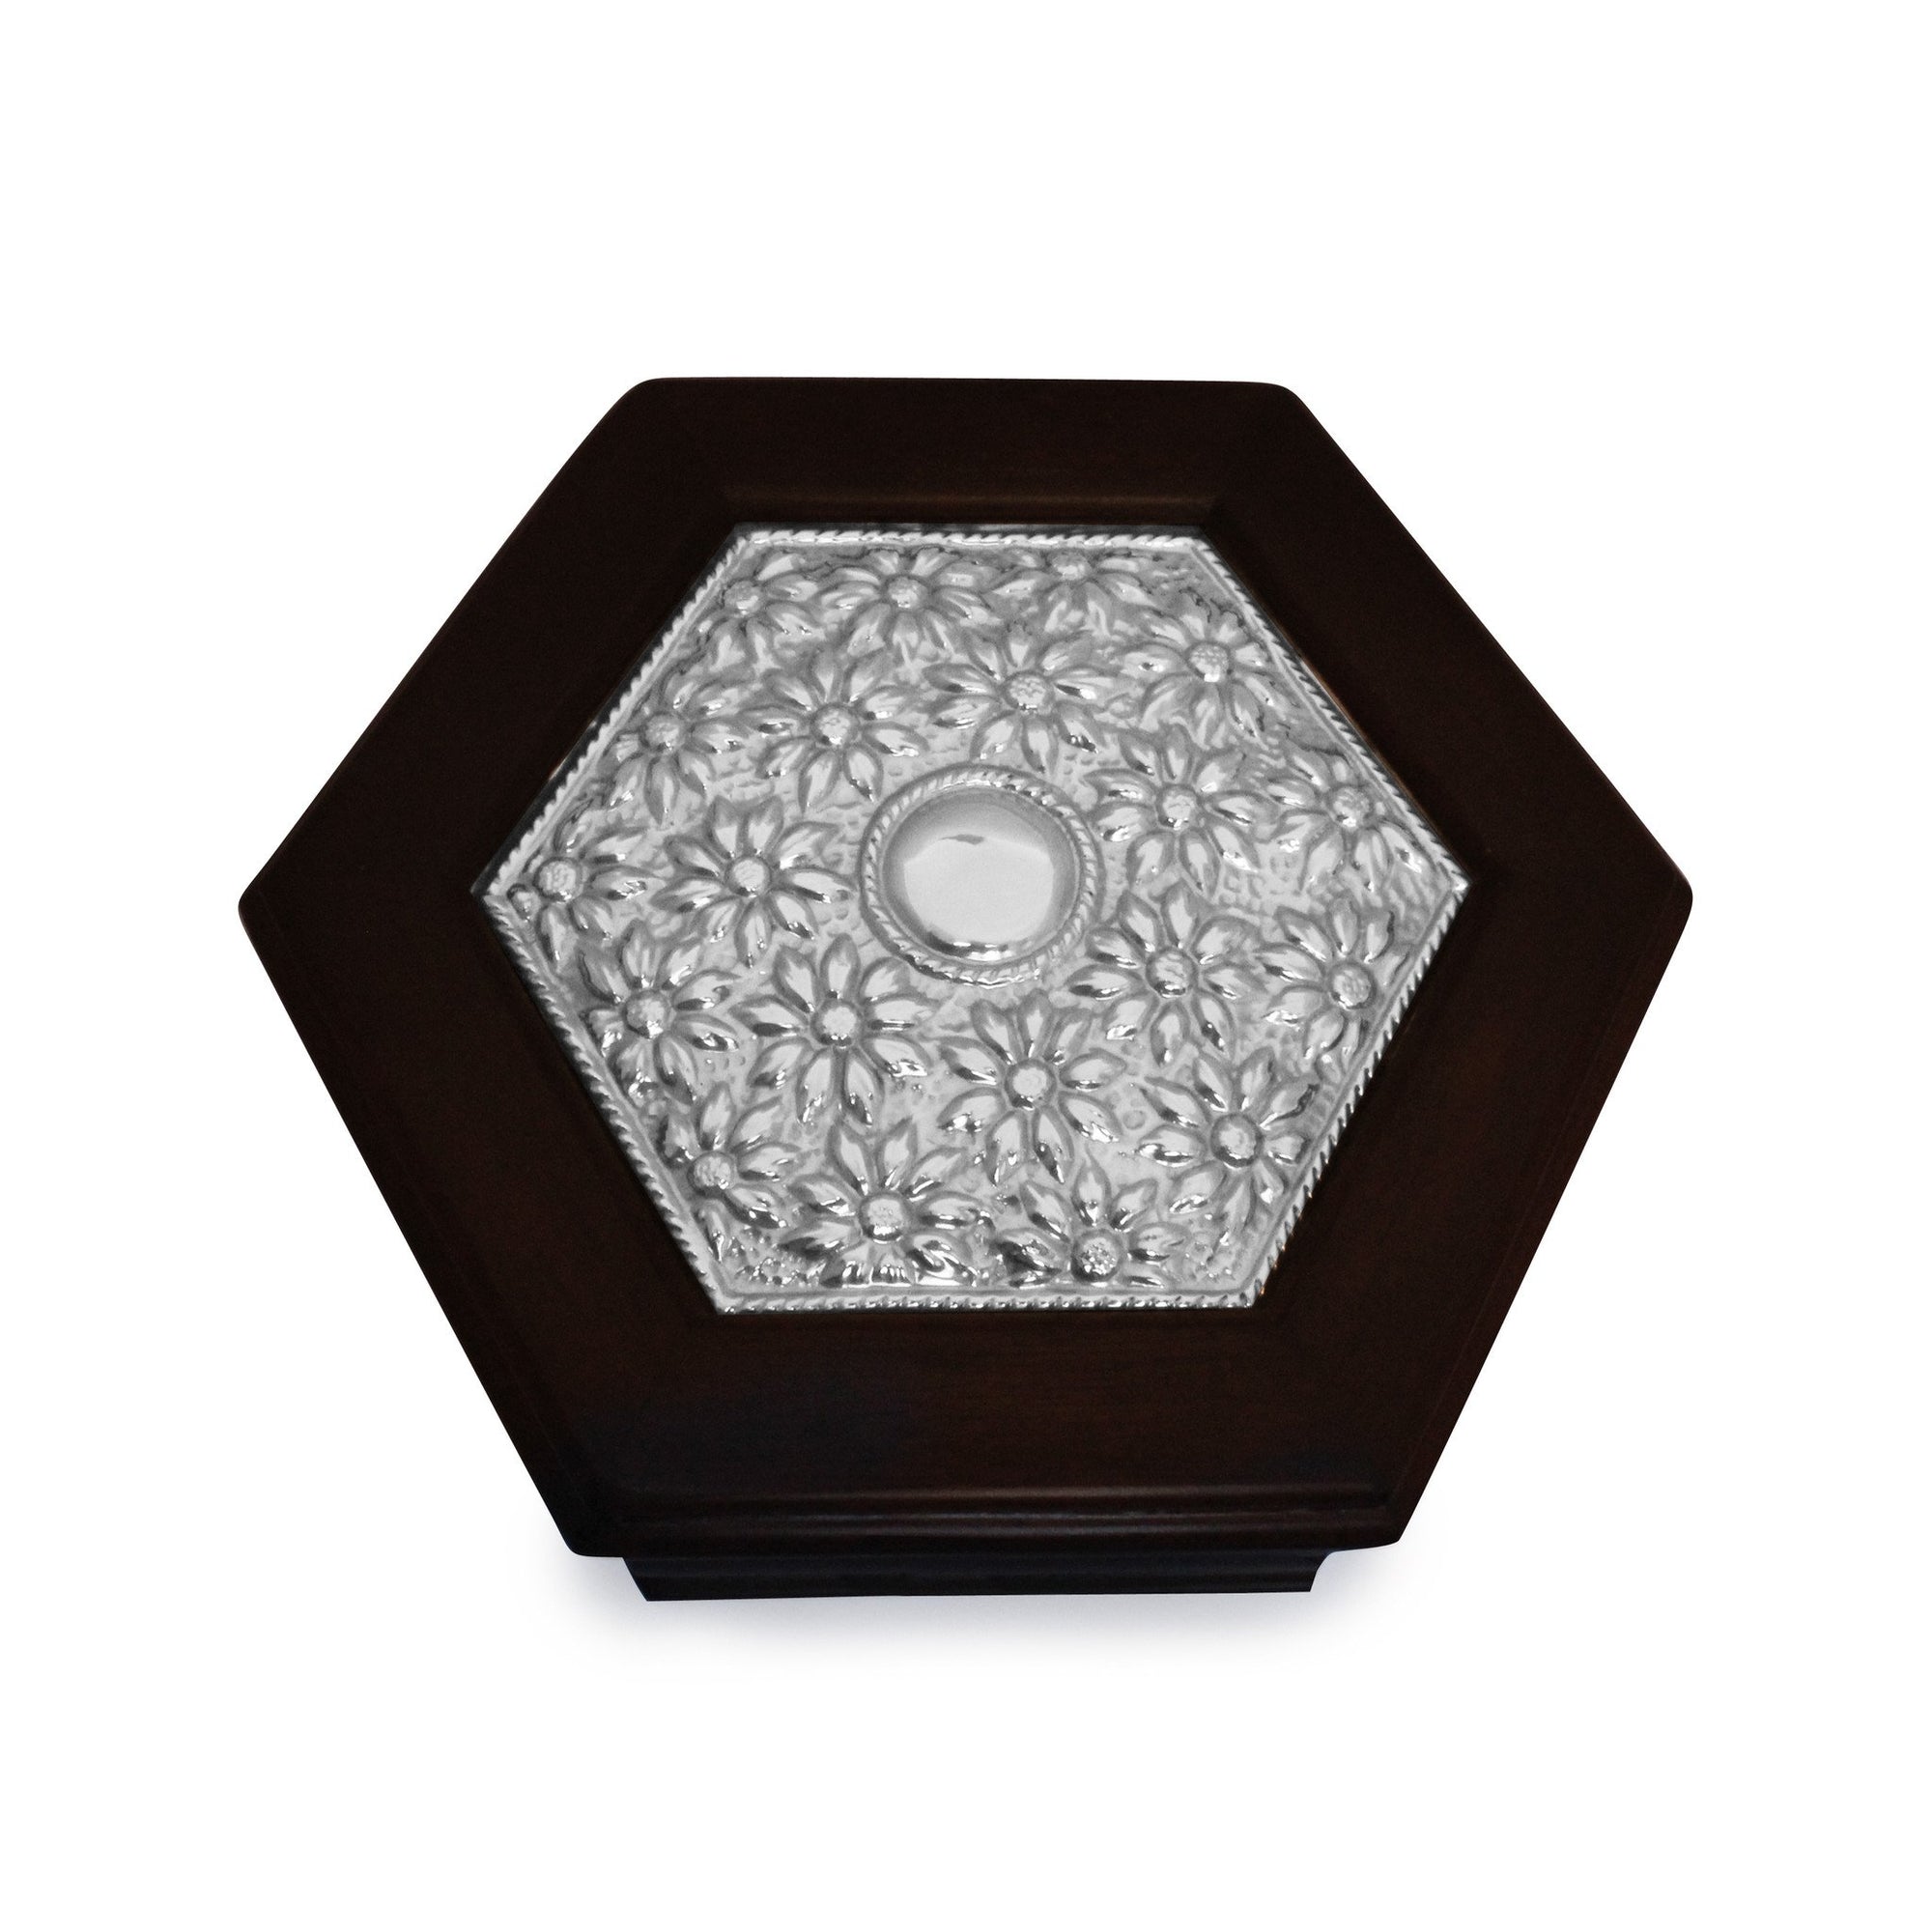 Hexagonal Keepsake Box with Sterling Silver Daisies - Qinti - The Peruvian Shop